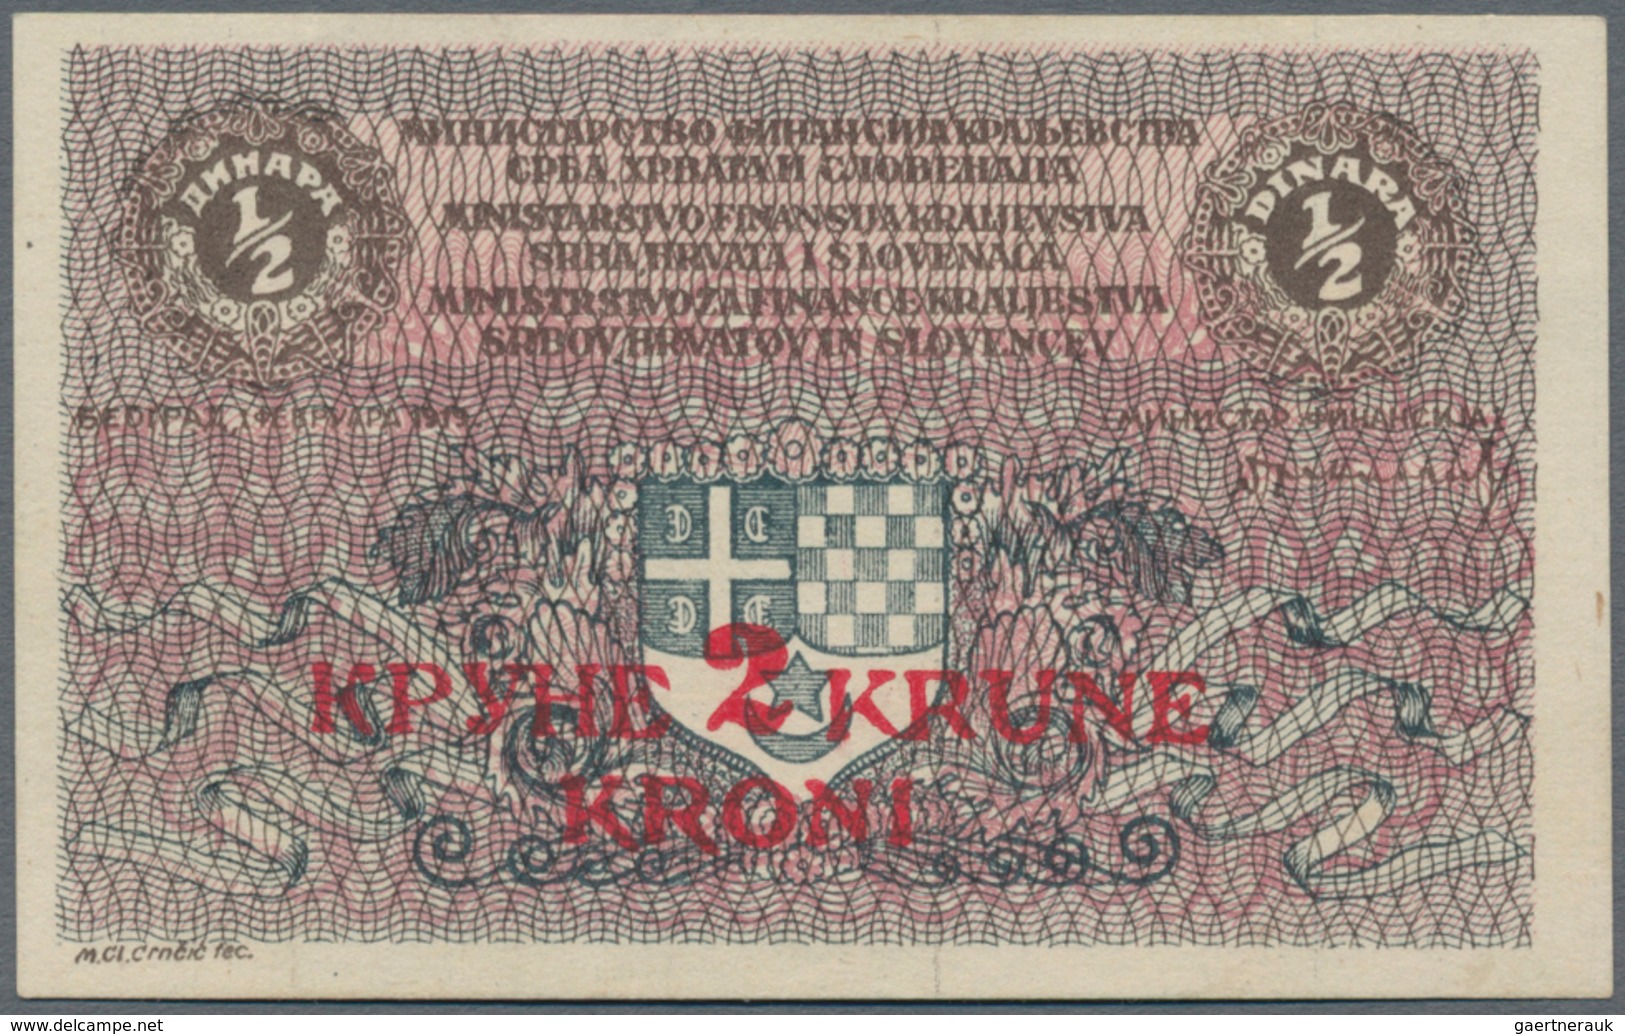 Yugoslavia / Jugoslavien: Kingdom of Serbs, Croats & Slovenes – Ministry of Finance, set with 9 bank